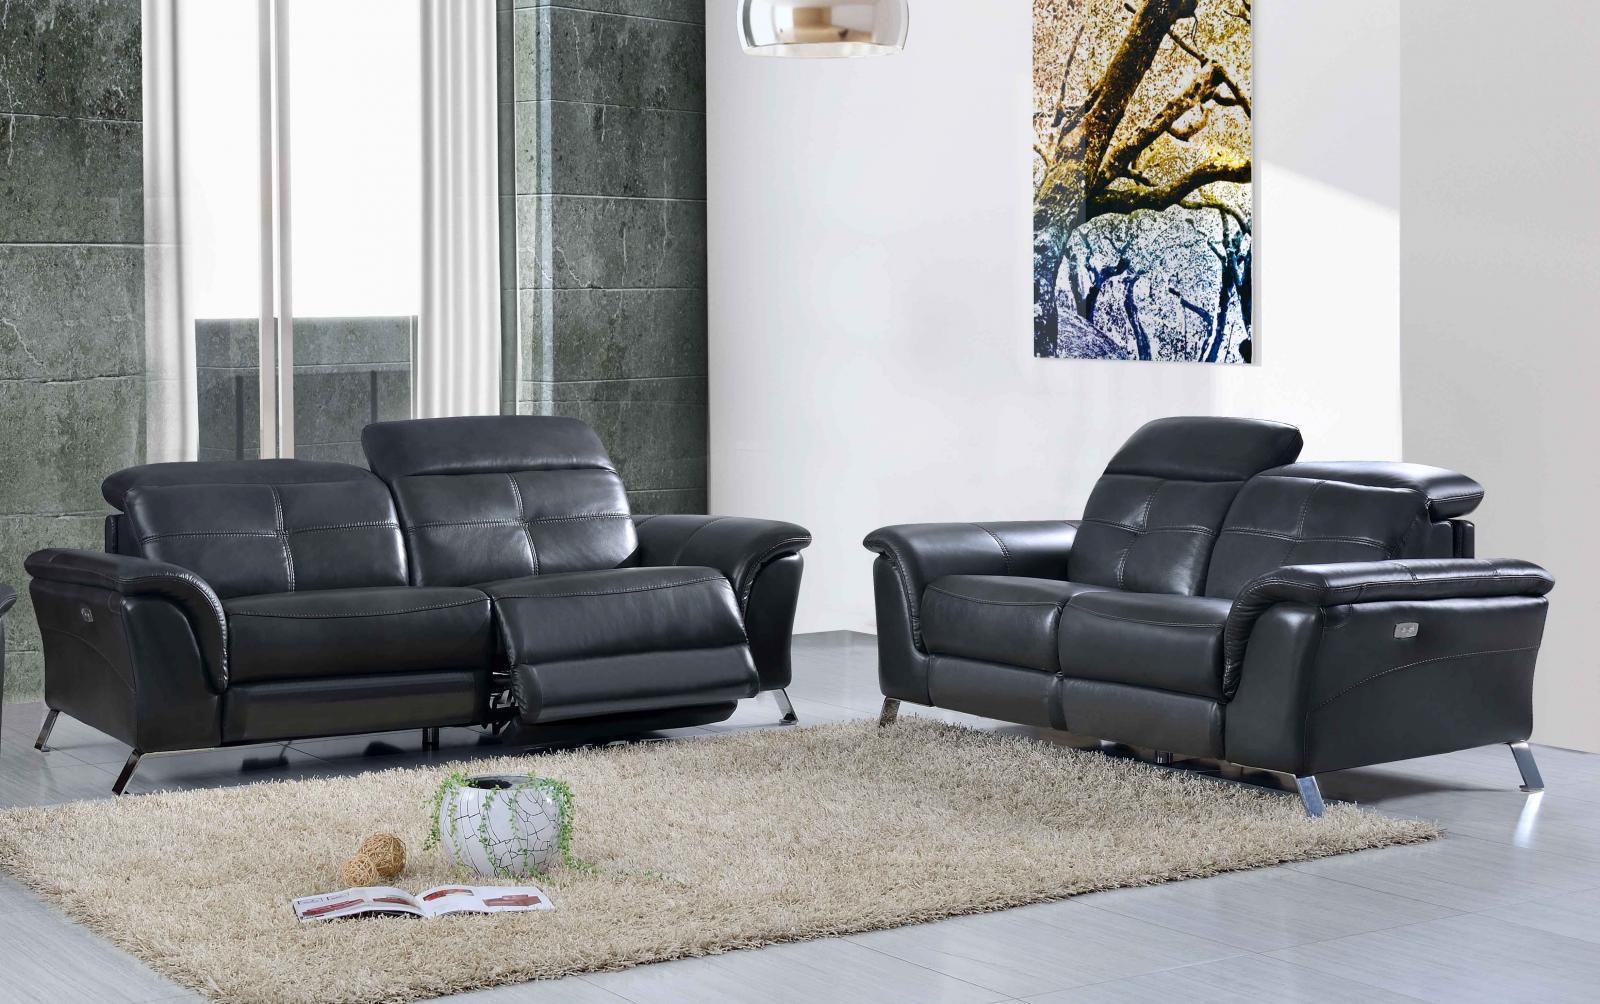 Leather Recliner Sofa Set Deals - codesignfiction